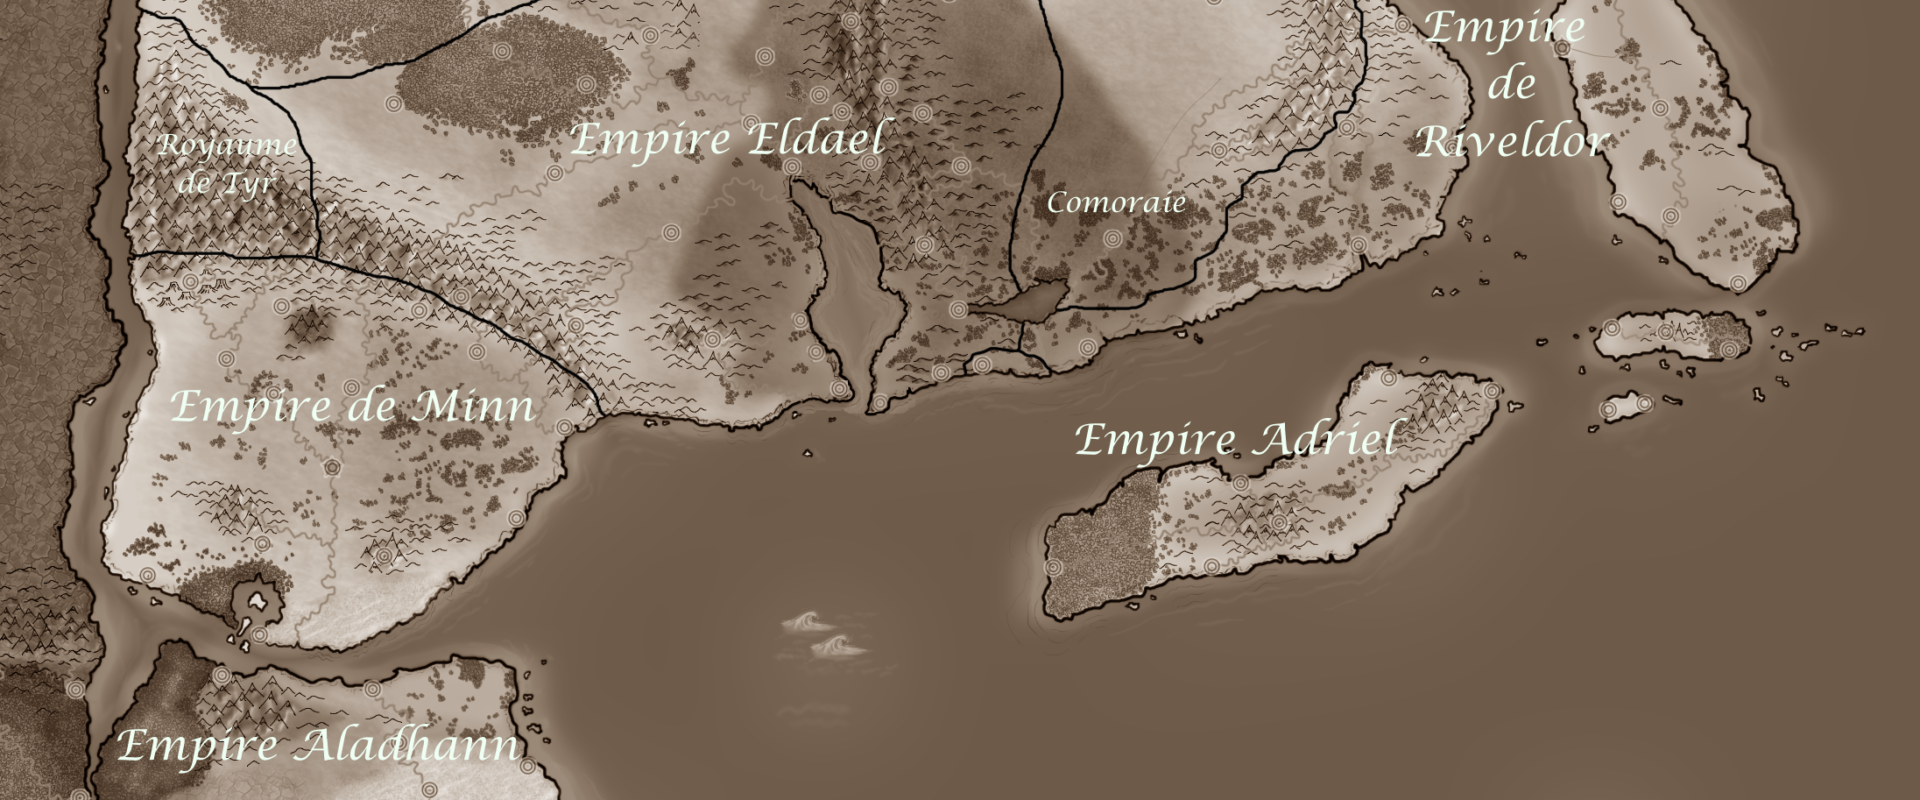 Permalink to: Les Six Empires